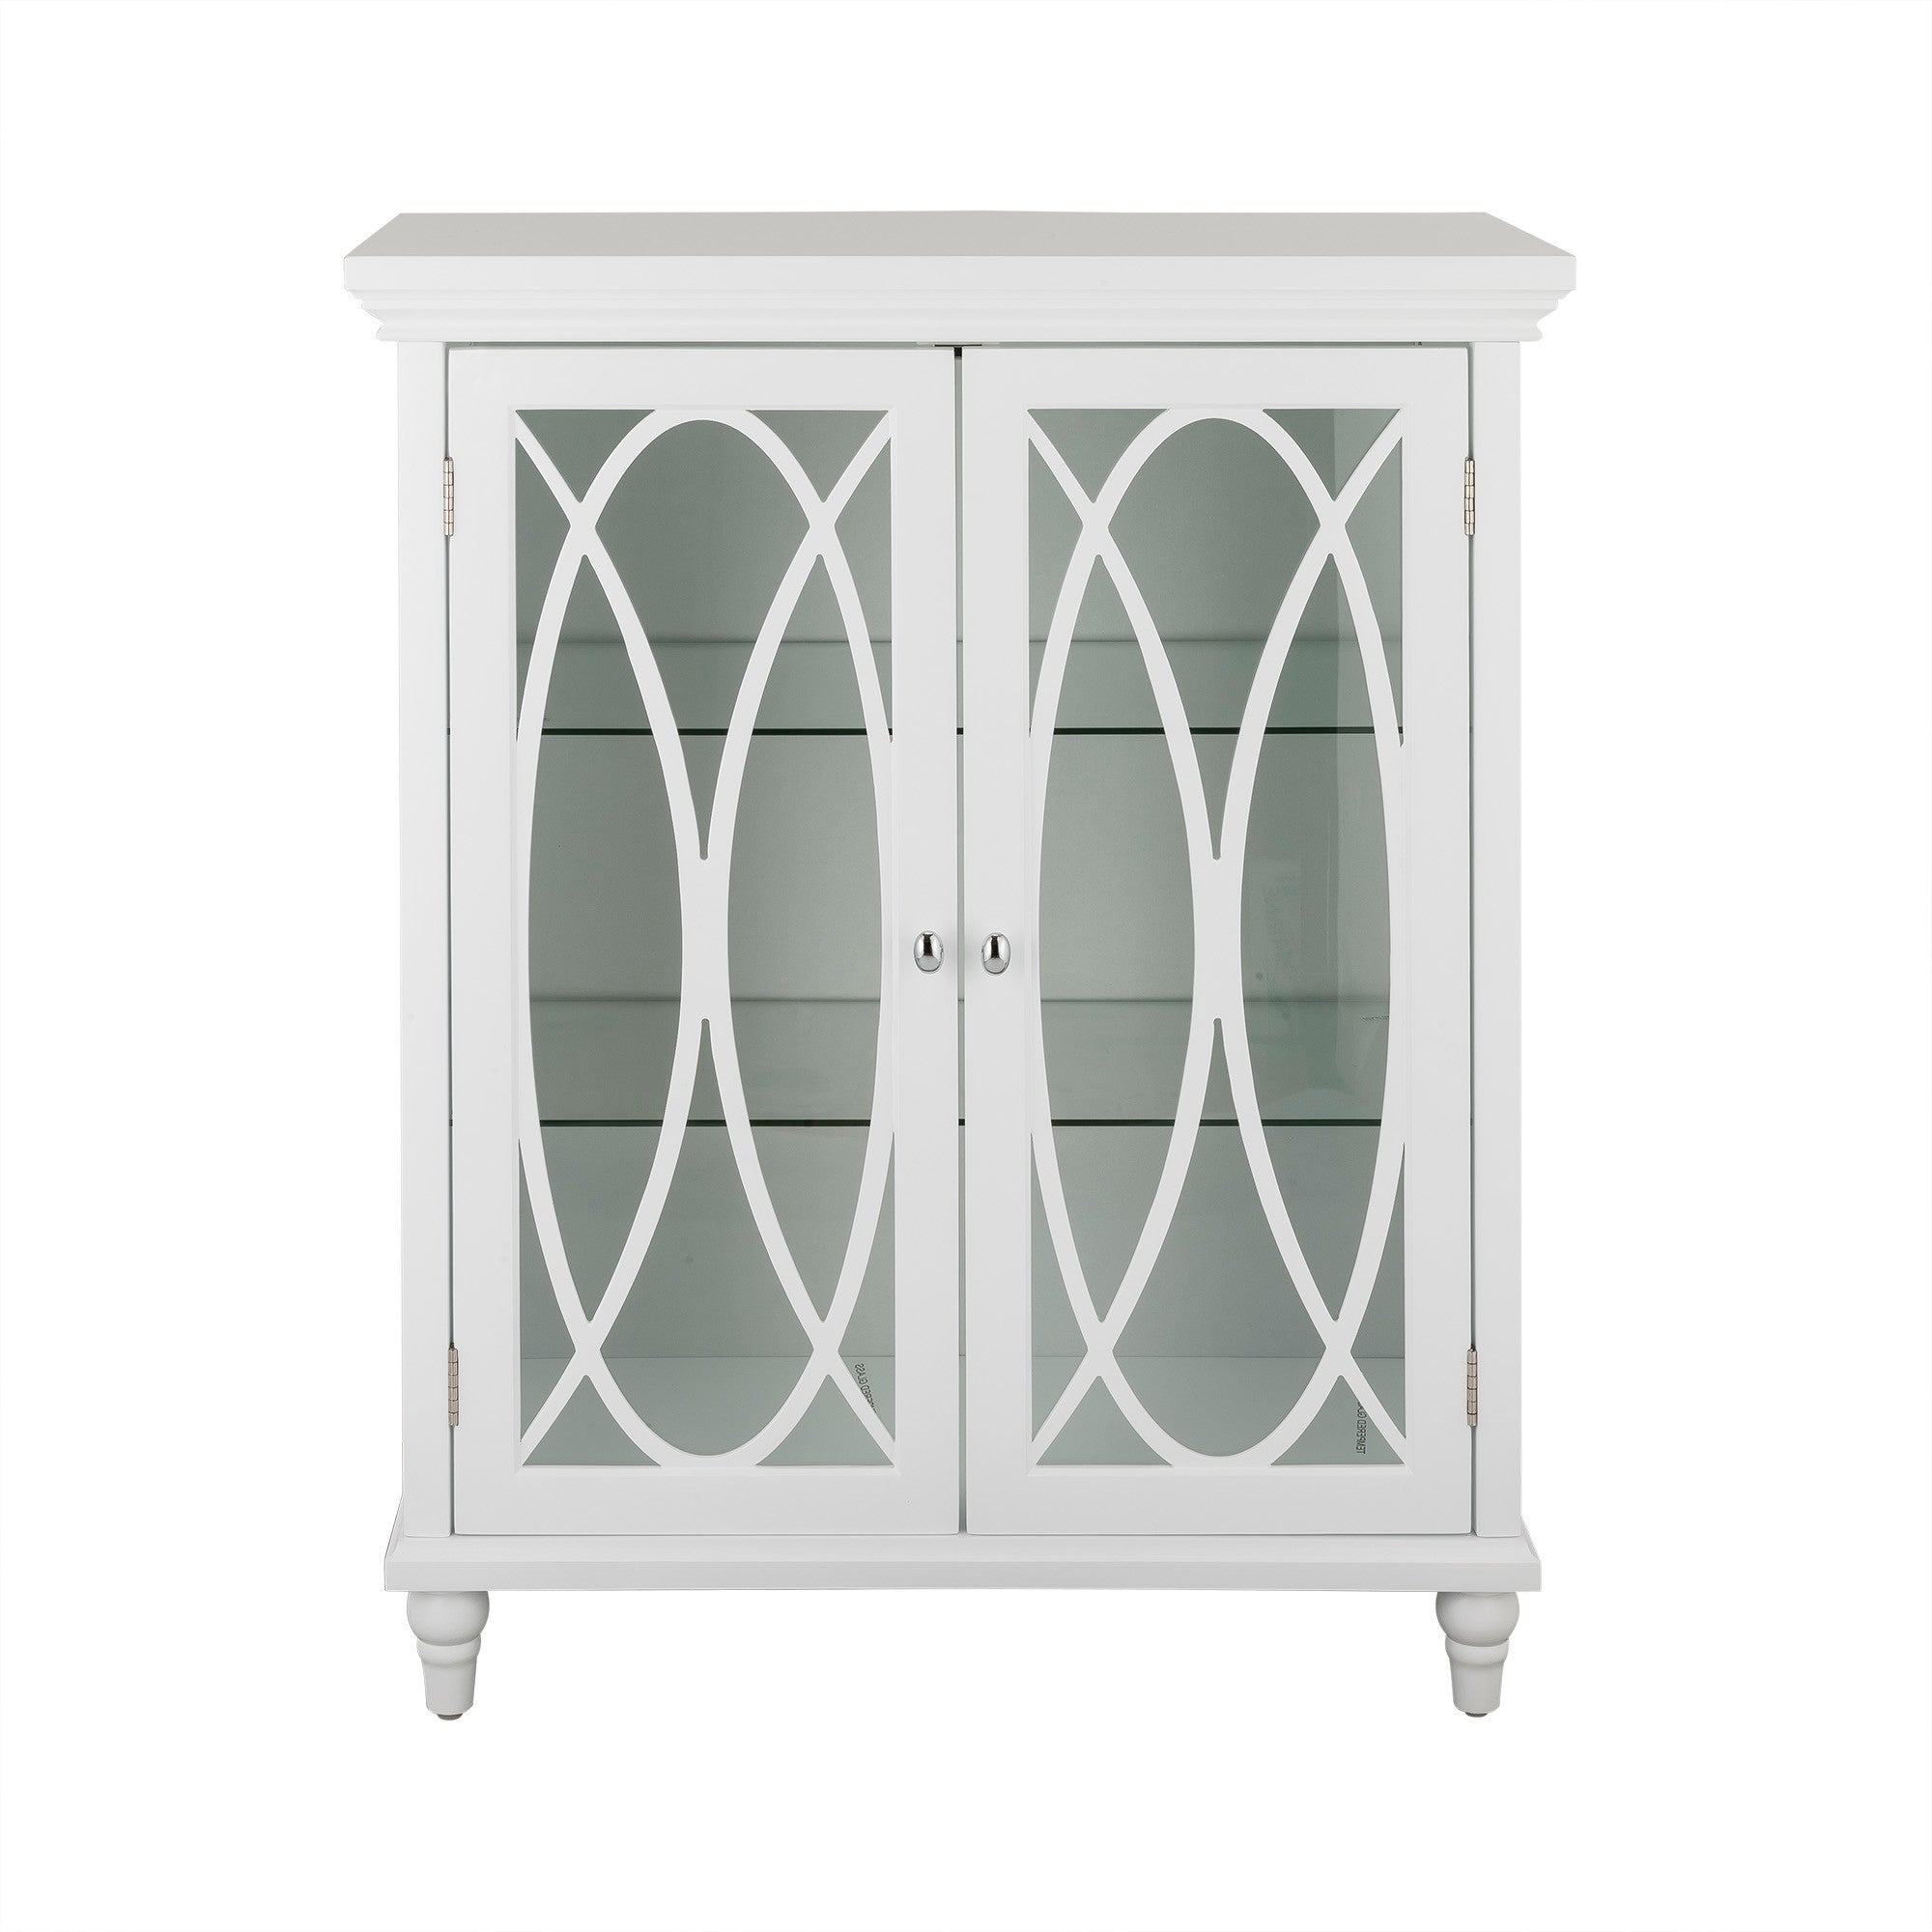 Teamson Home Florence 2 Door Wooden Floor Cabinet with Adjustable Shelves, Natural